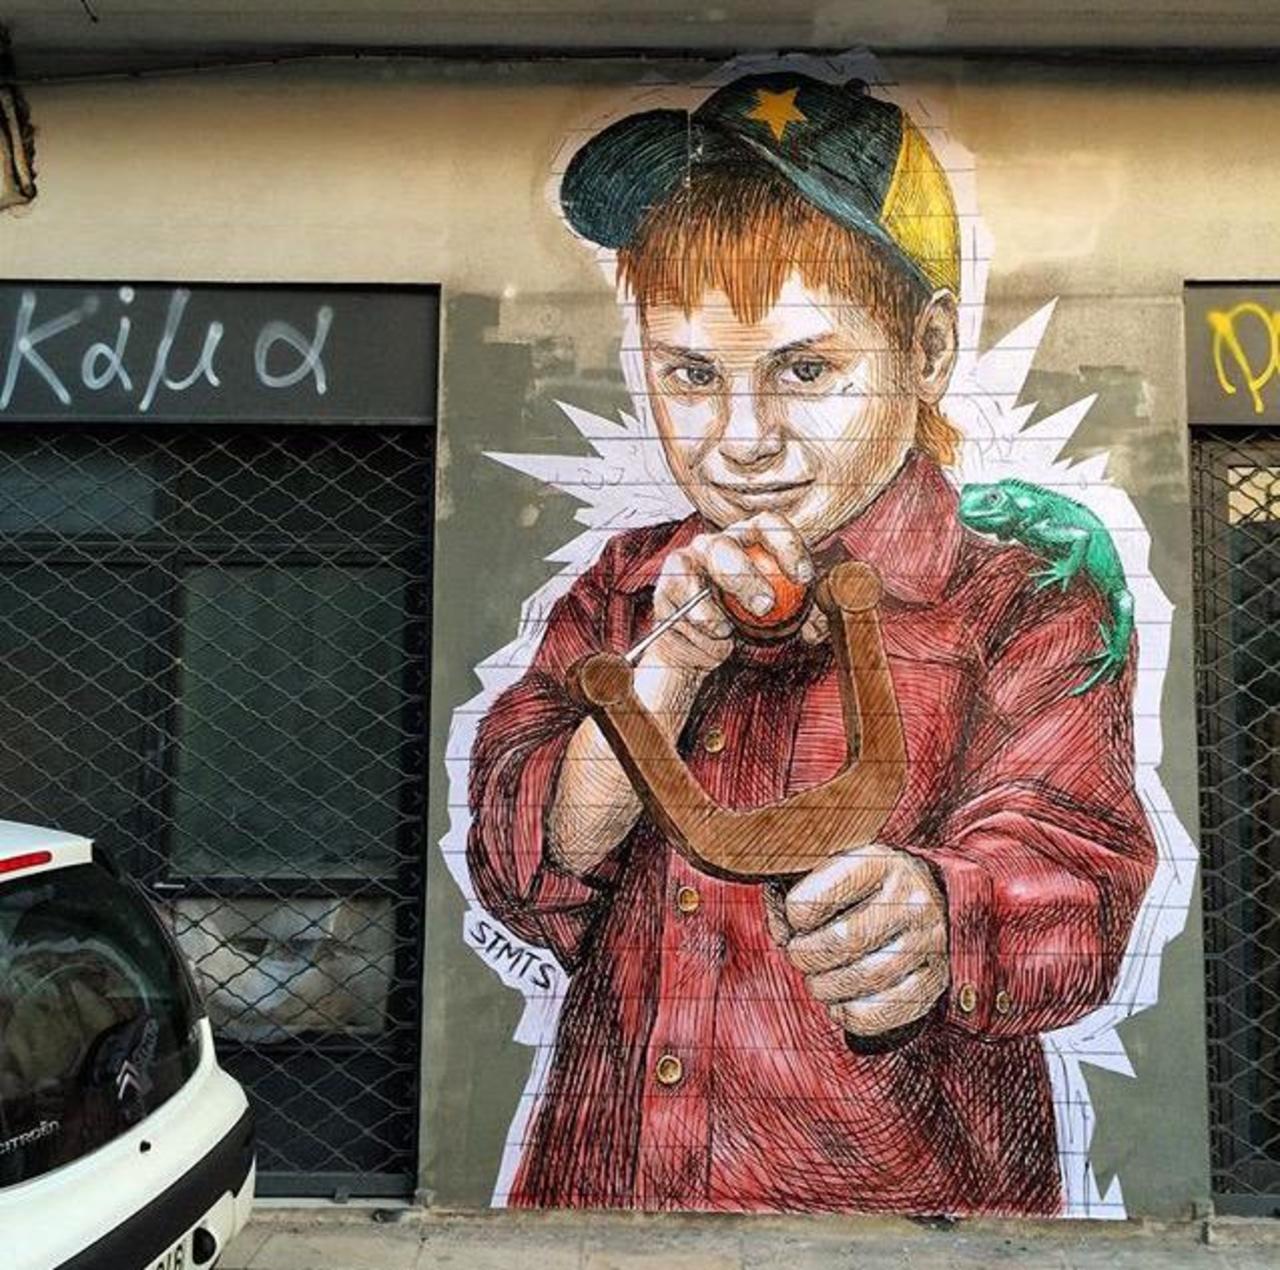 Street Art by STMTS in Athens

#art #graffiti #mural #streetart http://t.co/zkkLpfapxw